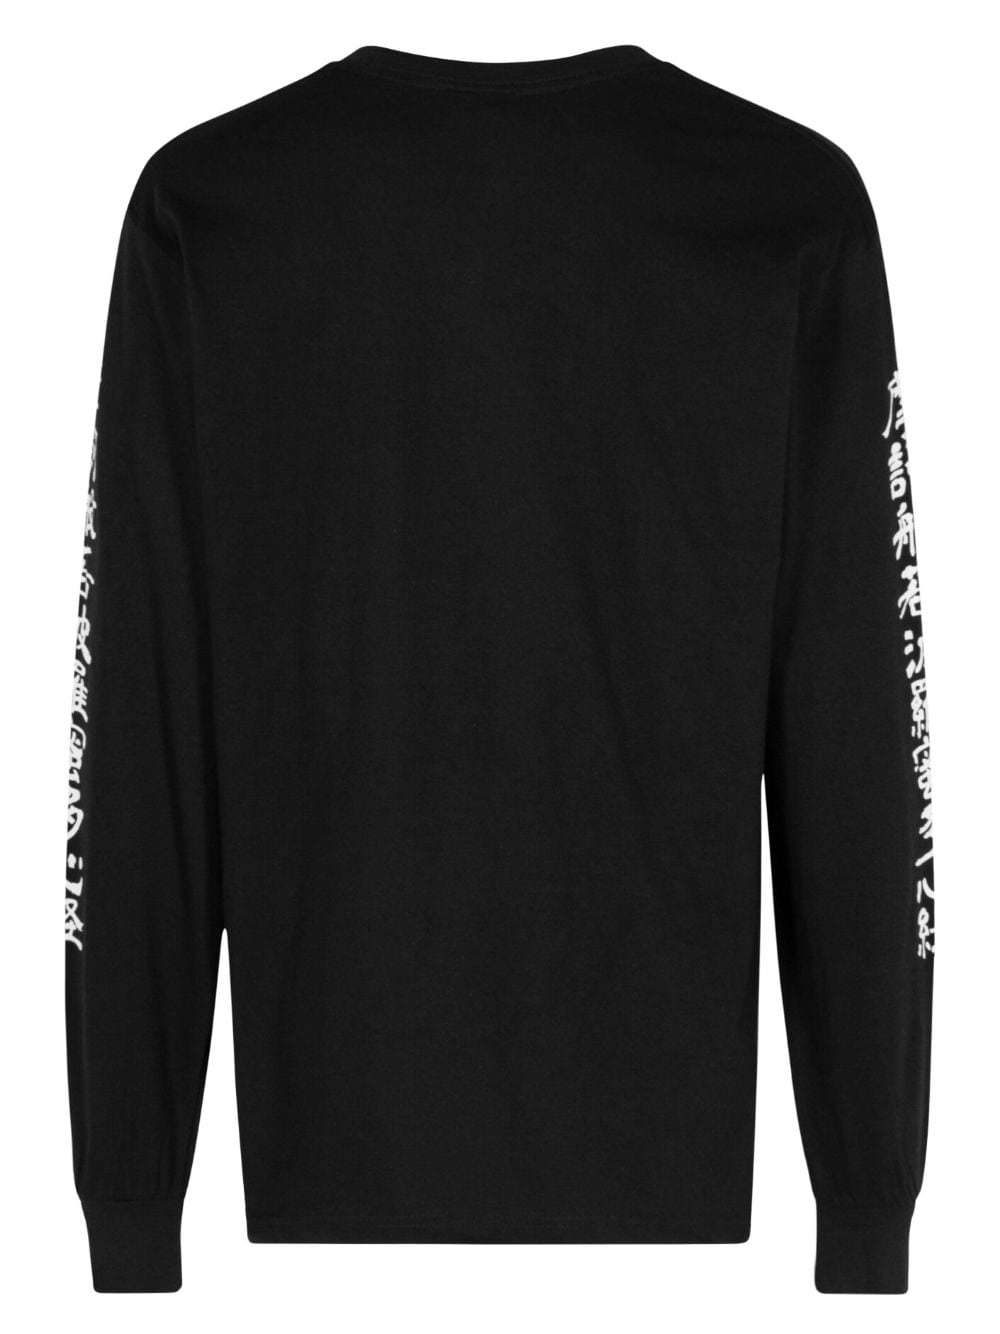 x Blackmeans "Black" T-shirt - 3